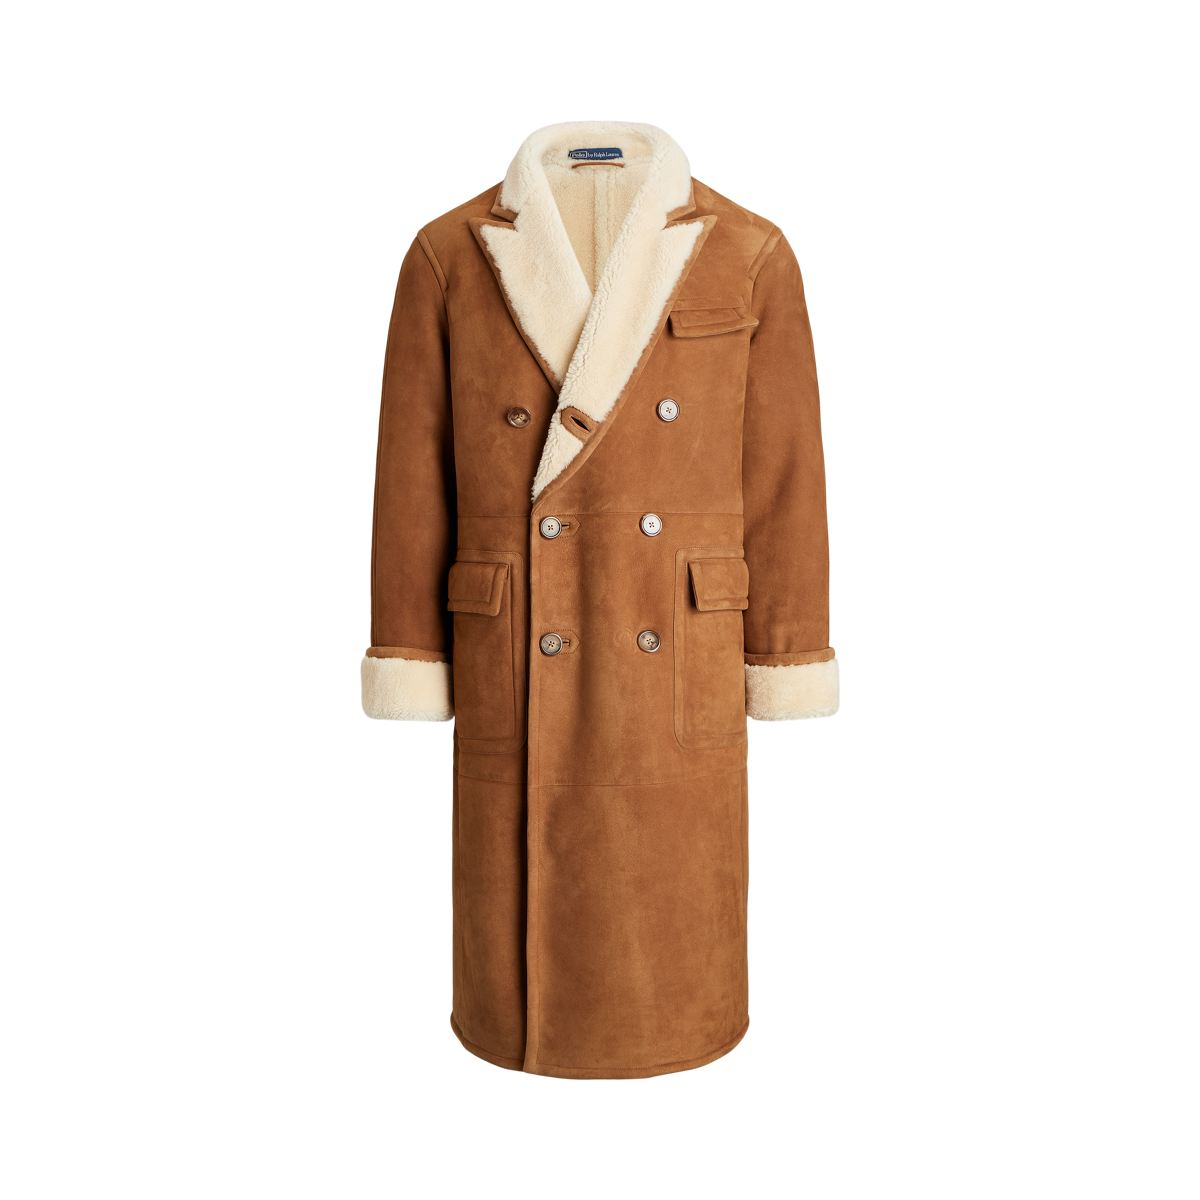 Ralph Lauren Mens Shearling Coat on Sale | bellvalefarms.com